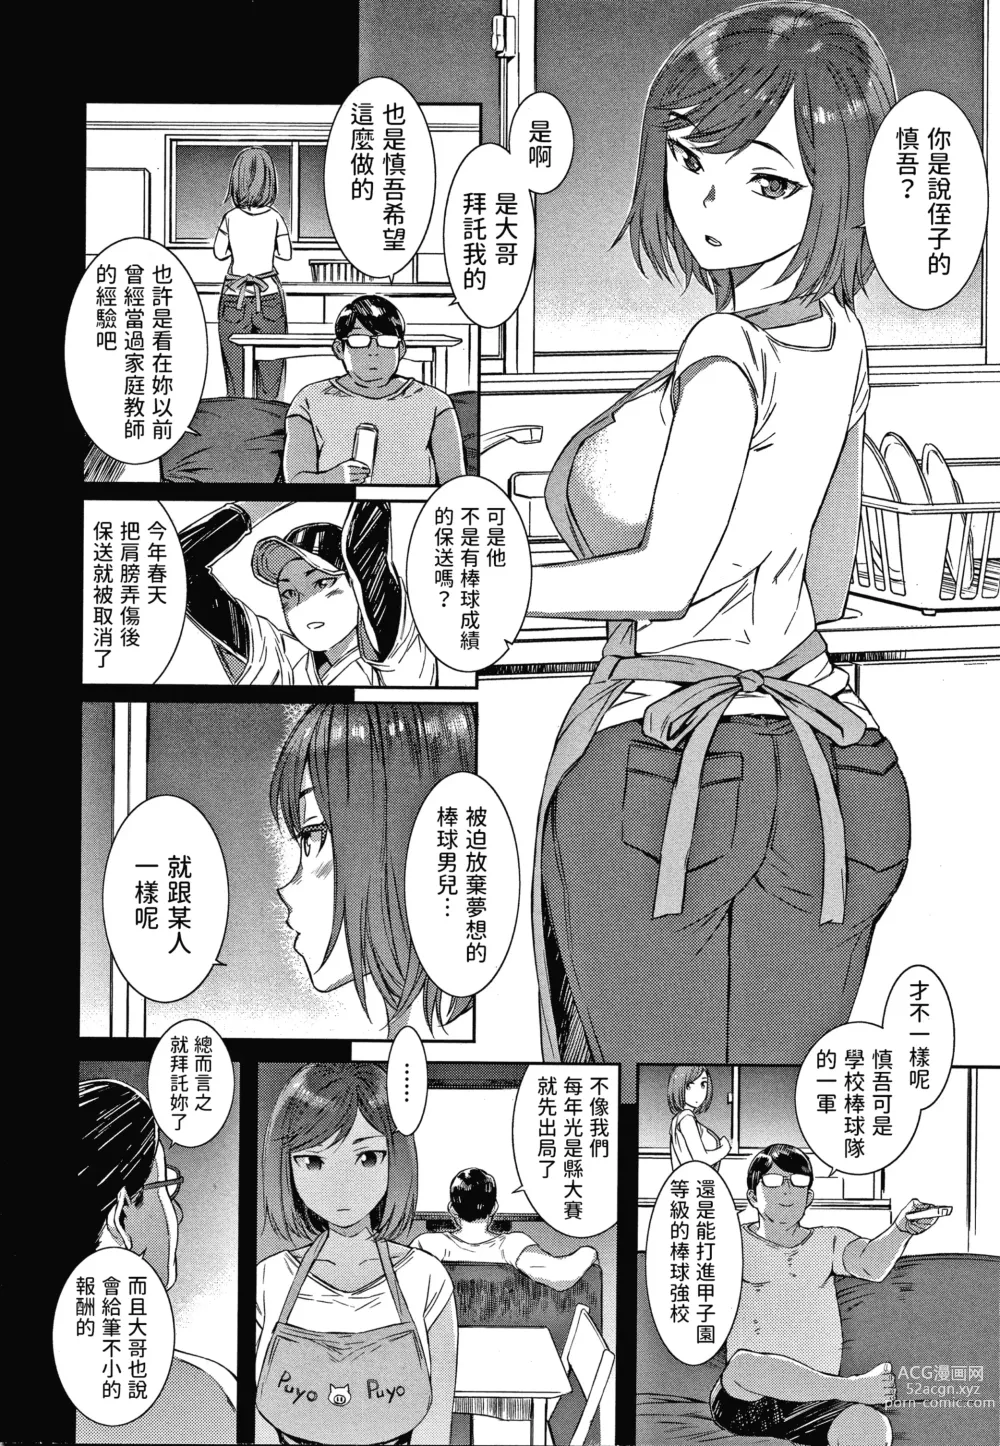 Page 2 of manga My Tutor